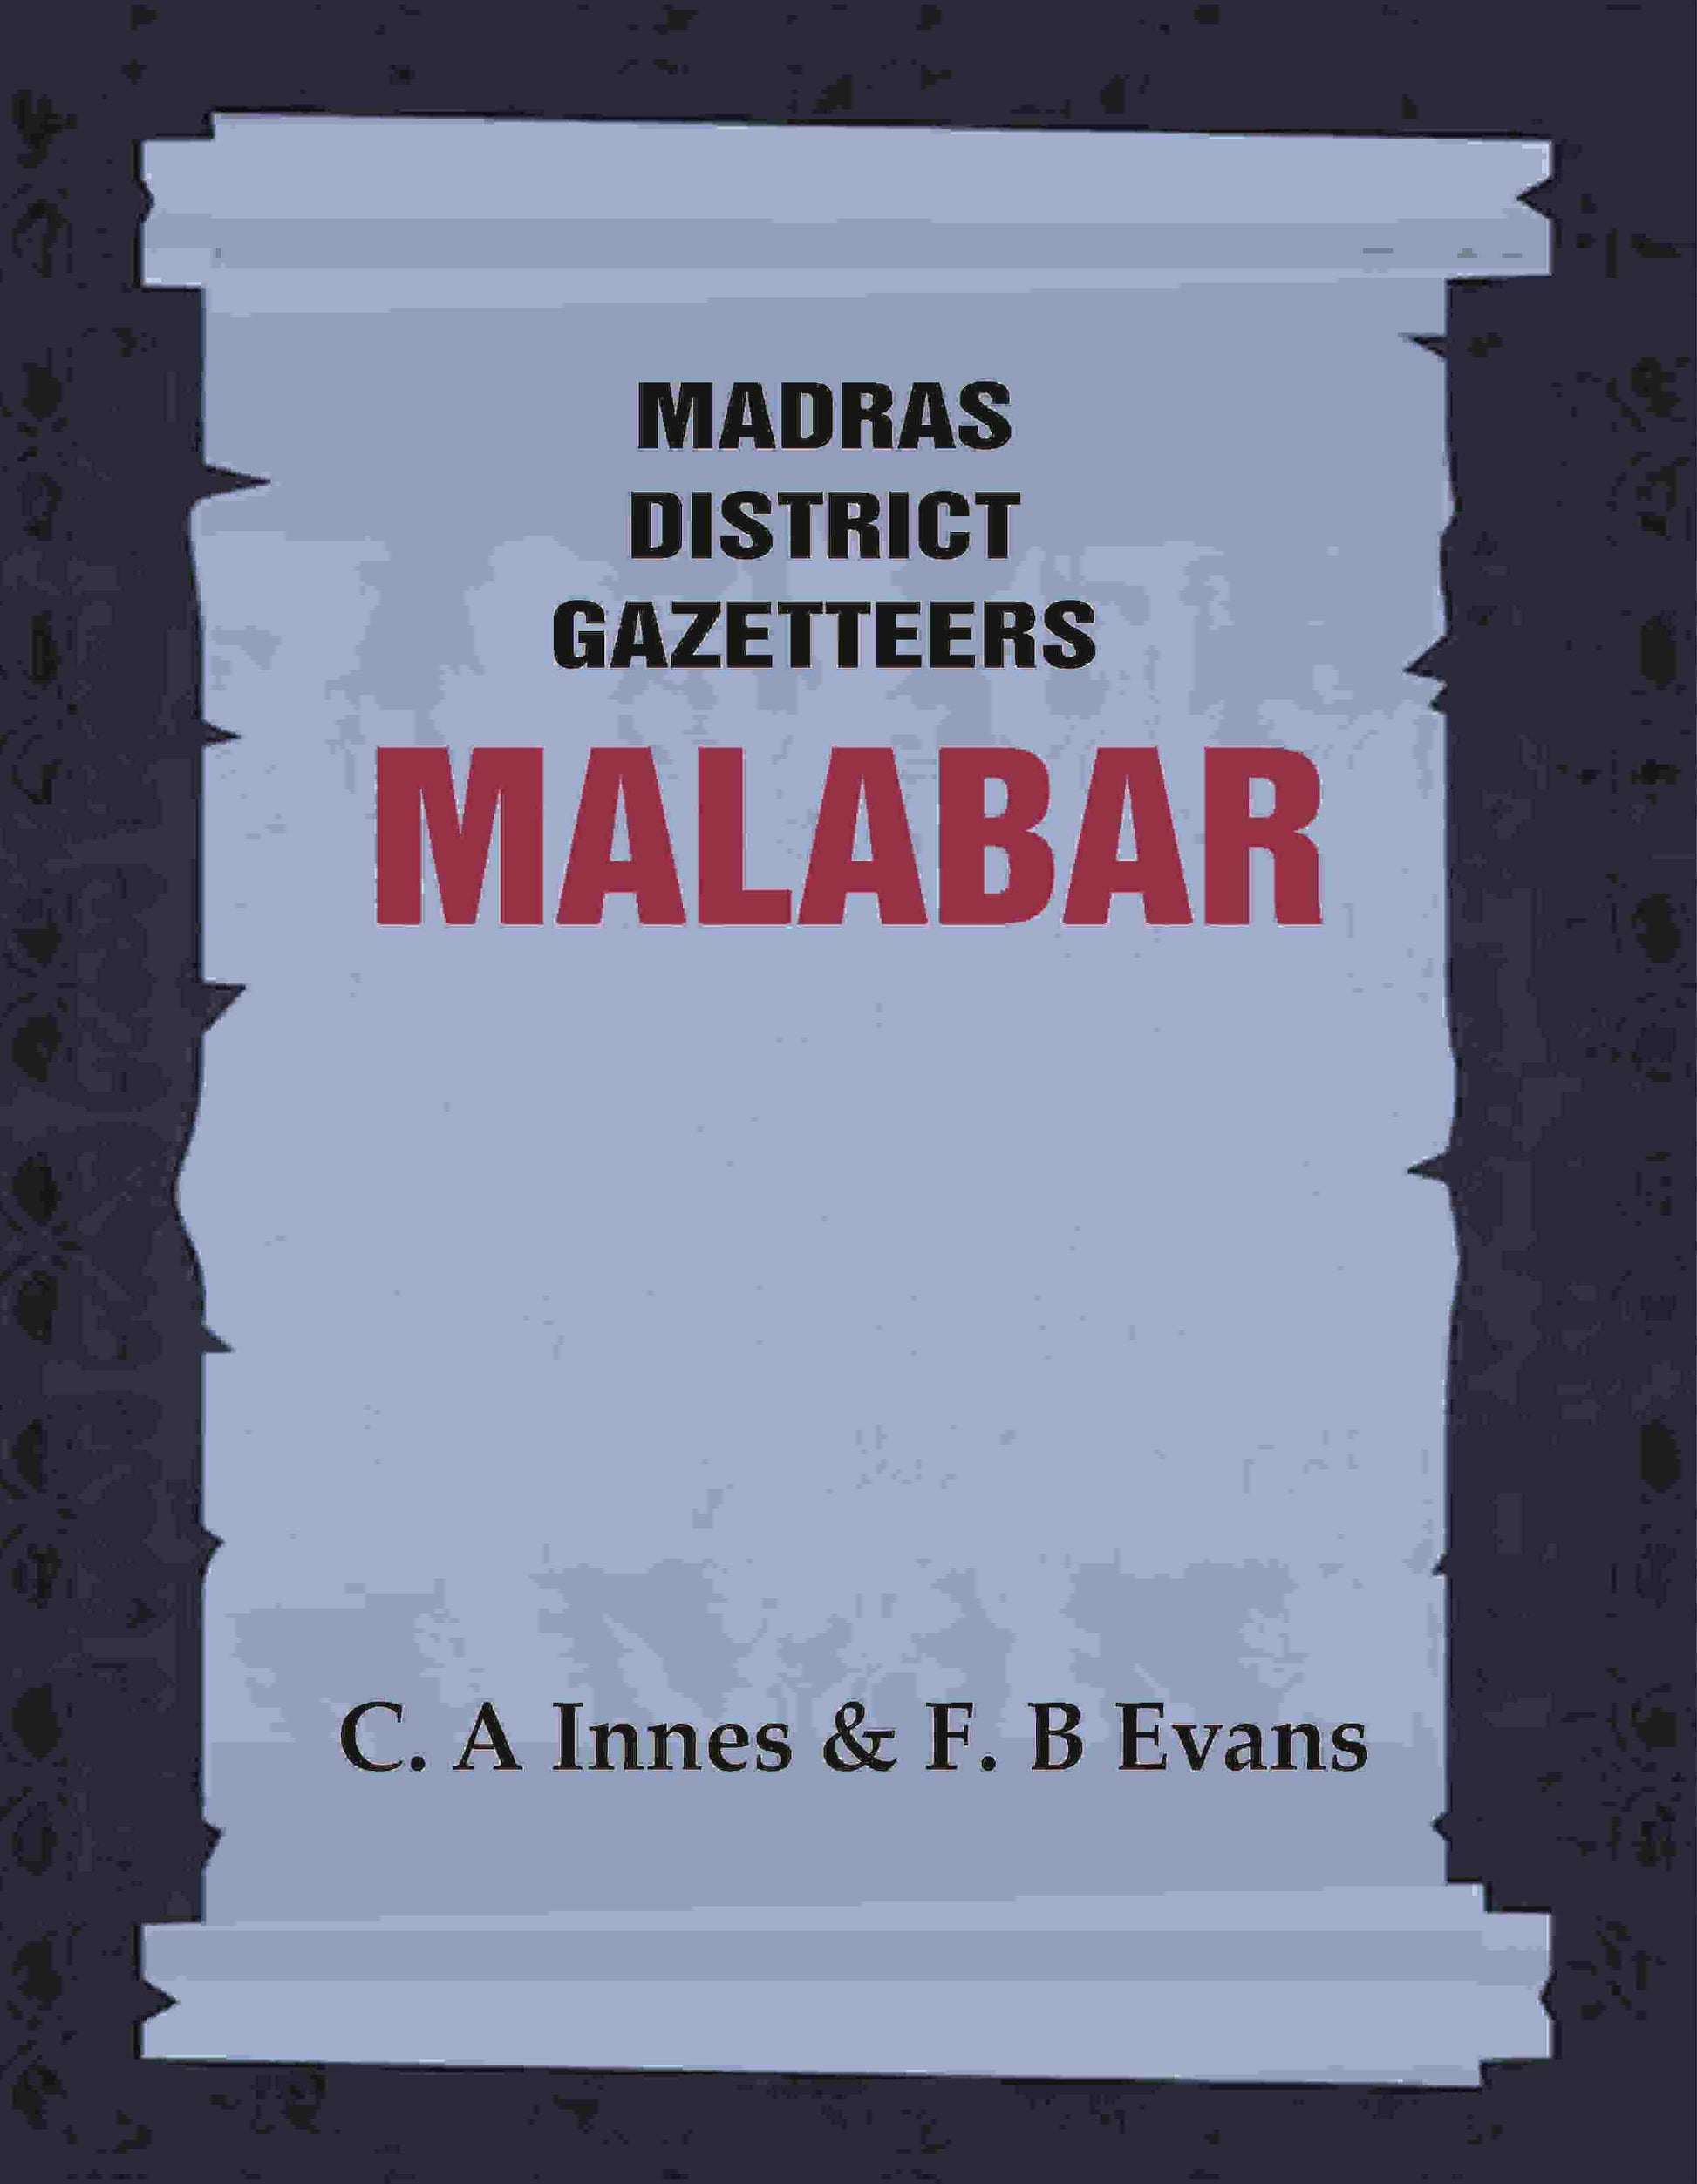 Madras District Gazetteers: Malabar